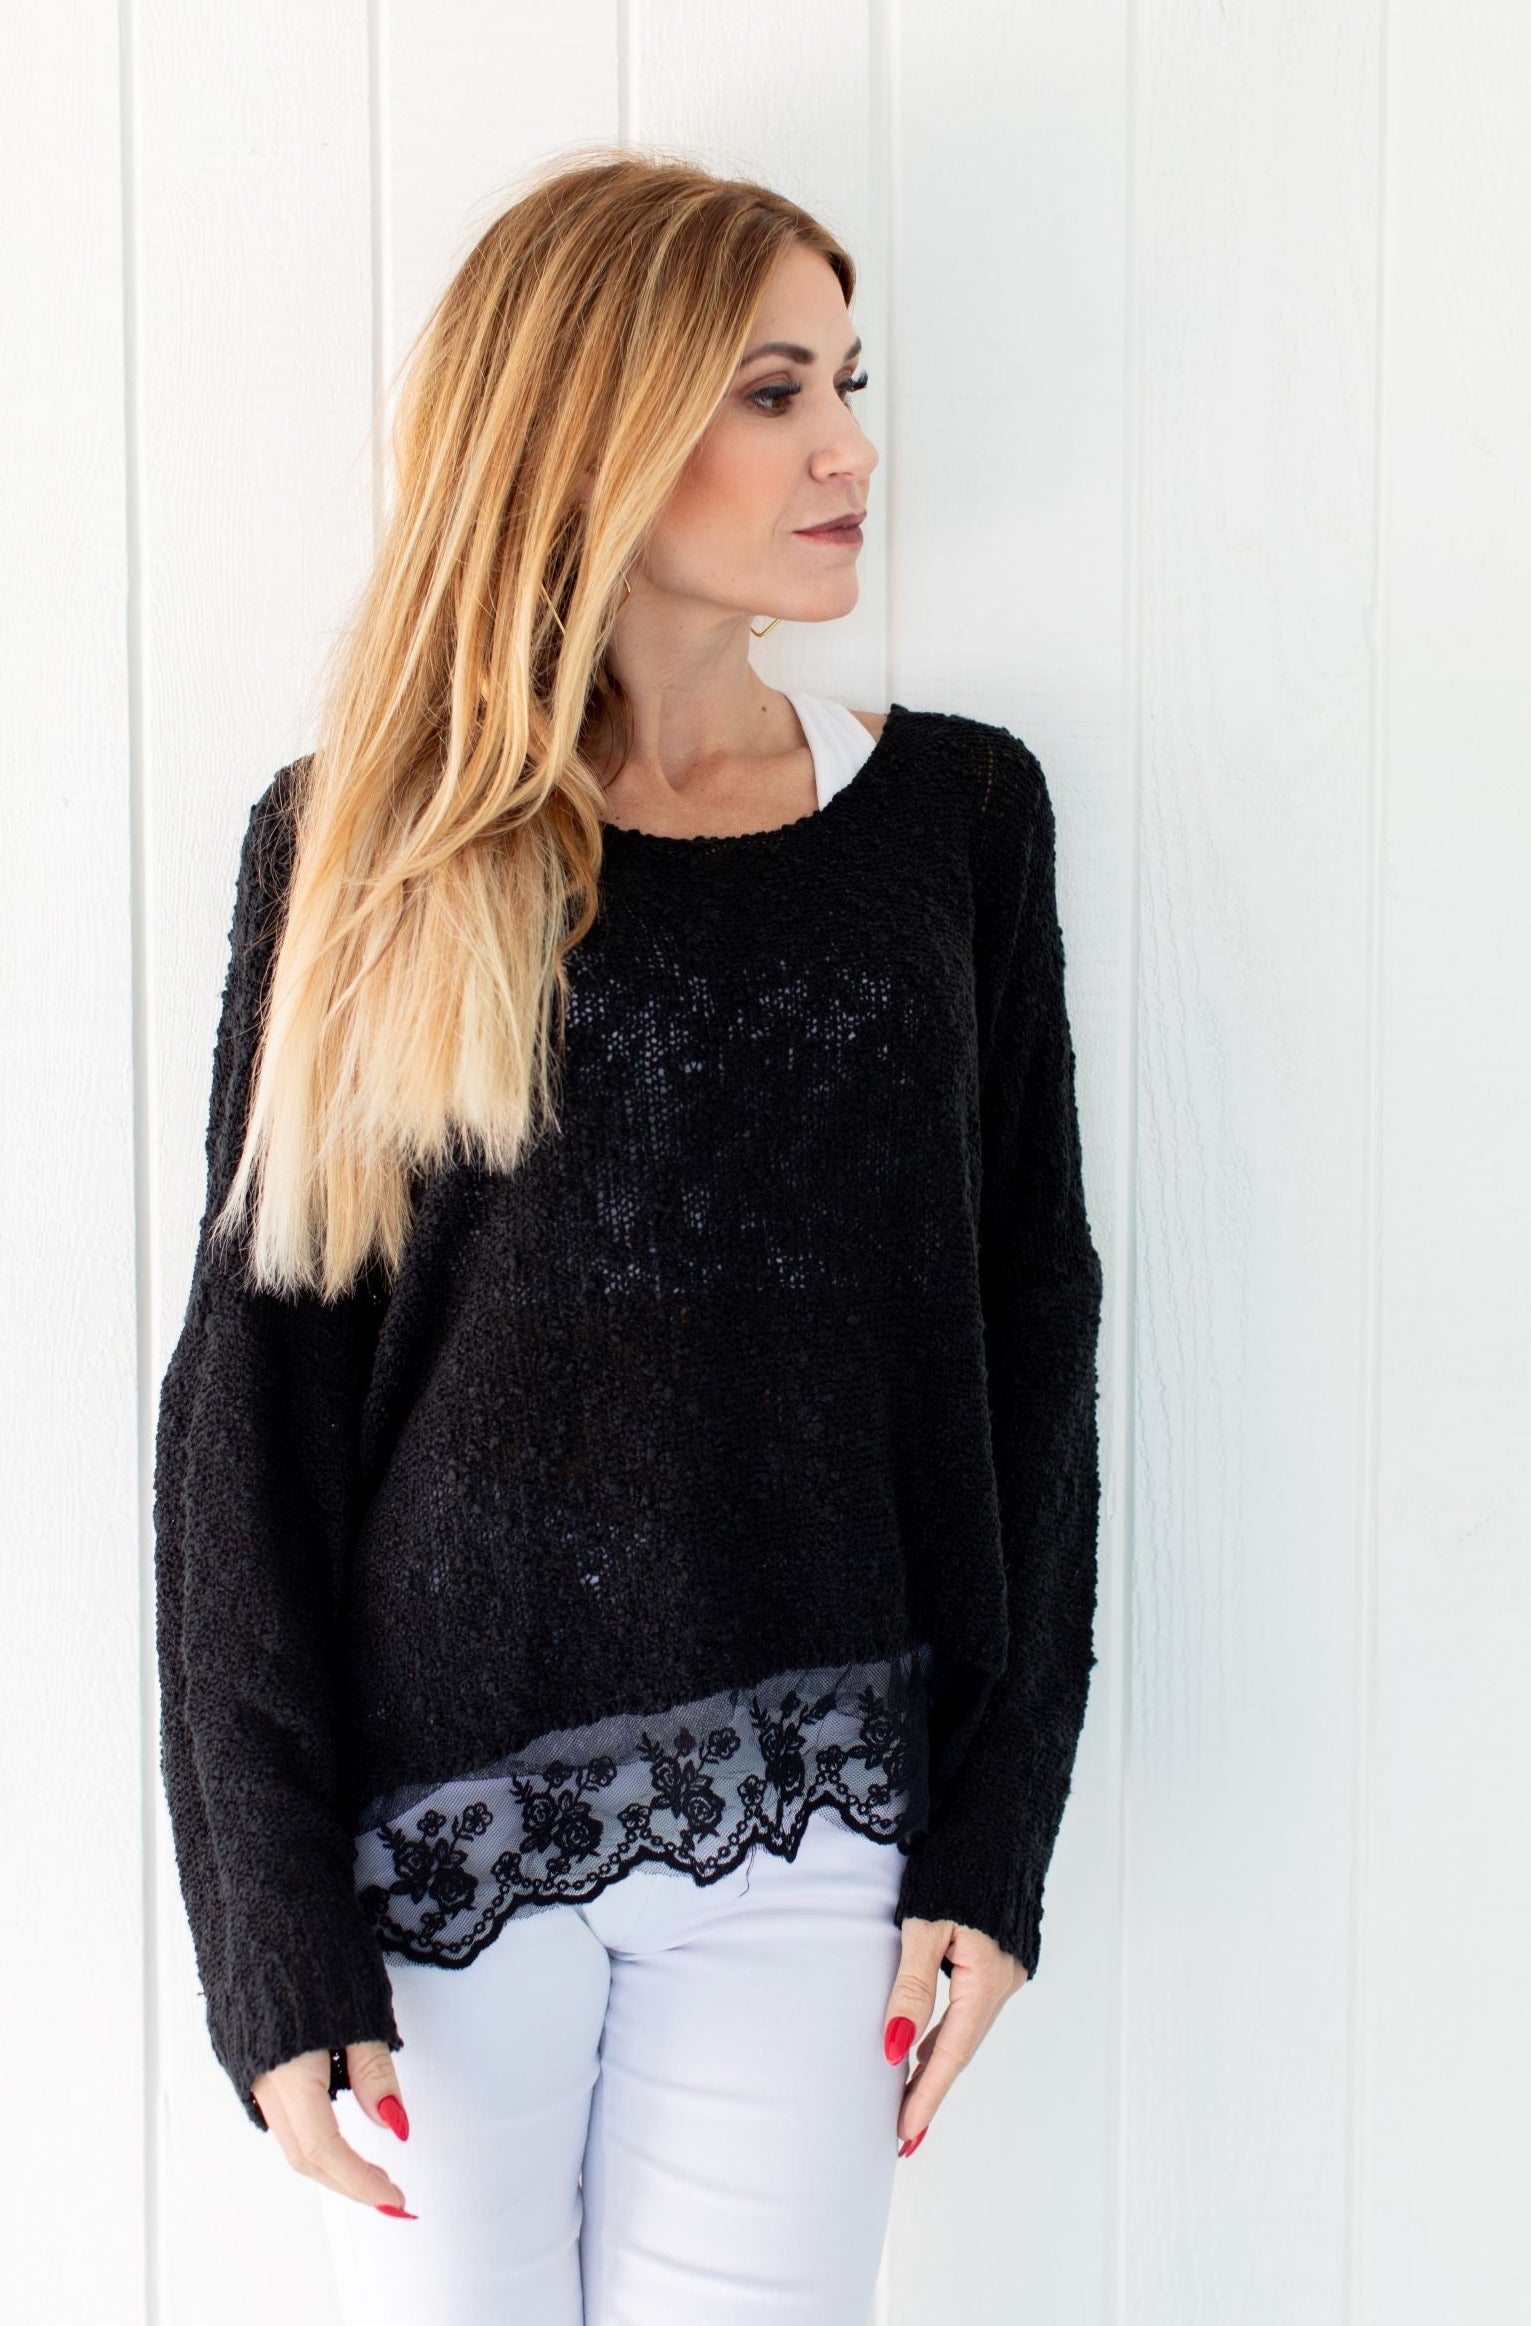 Lace Sweater Black Tops jeanpierreklifa.com   